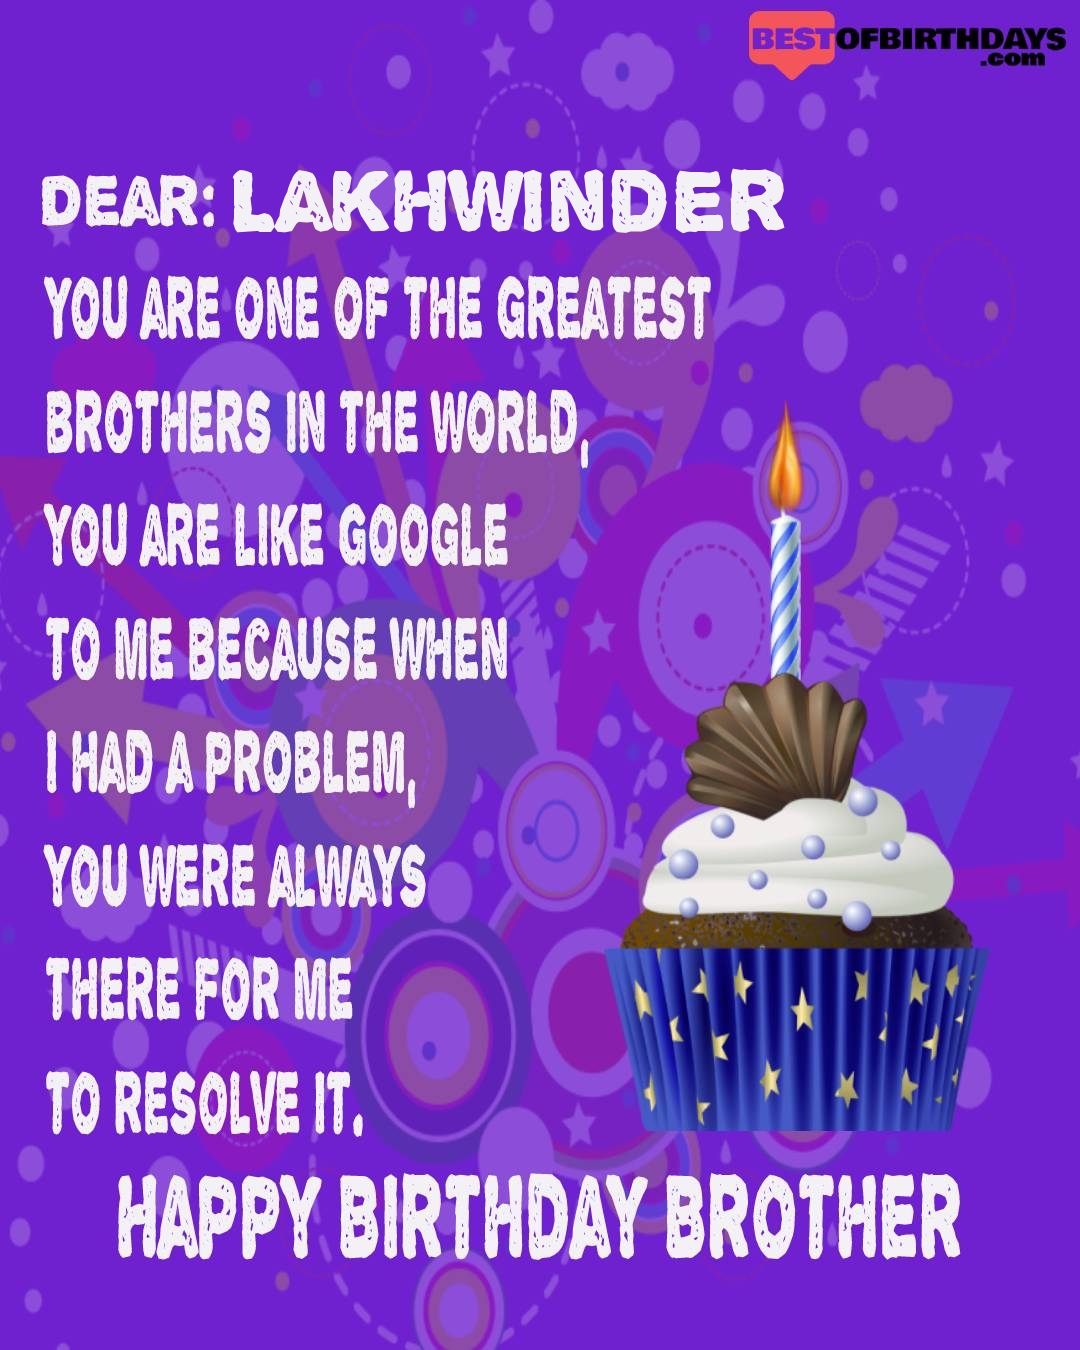 Happy birthday lakhwinder bhai brother bro